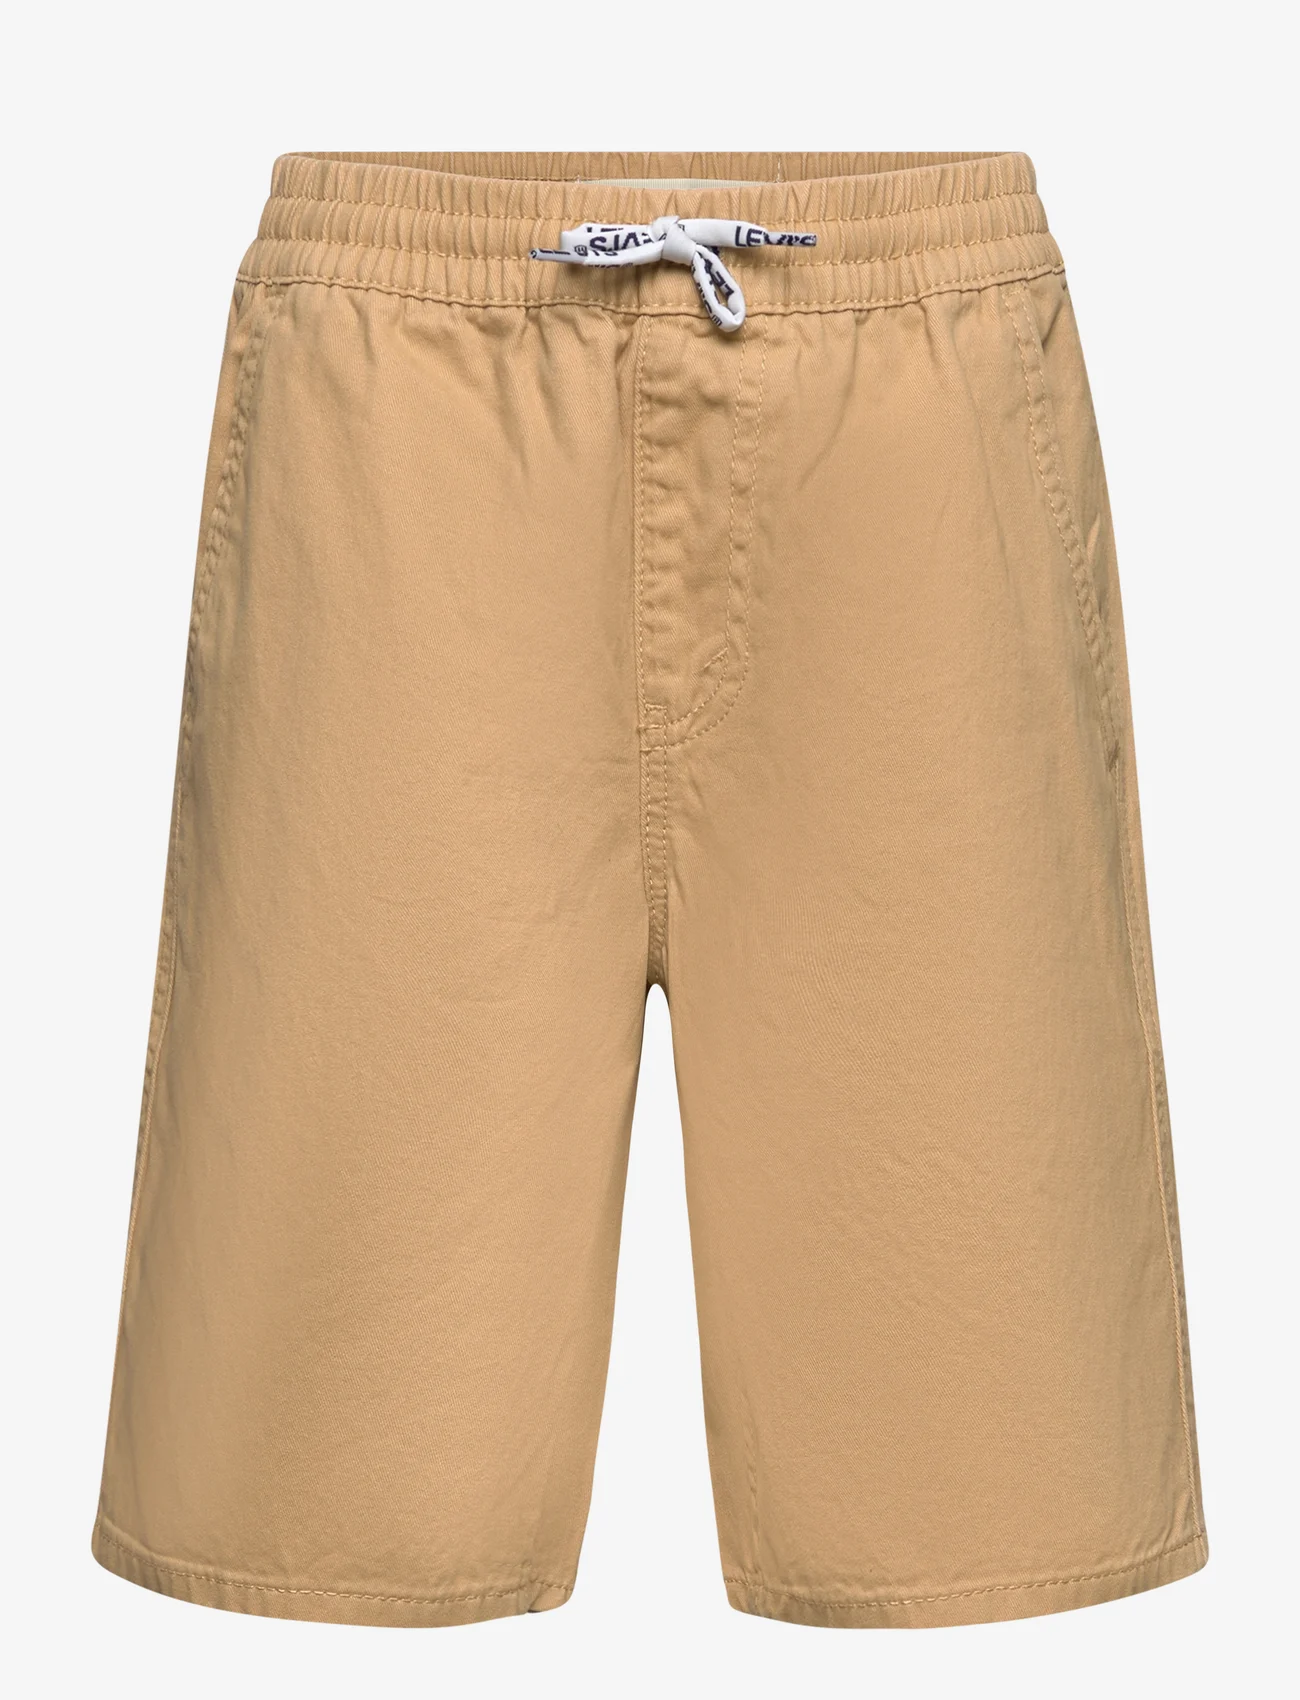 Levi's - Levi's® Pull On Woven Shorts - collegeshortsit - brown - 0